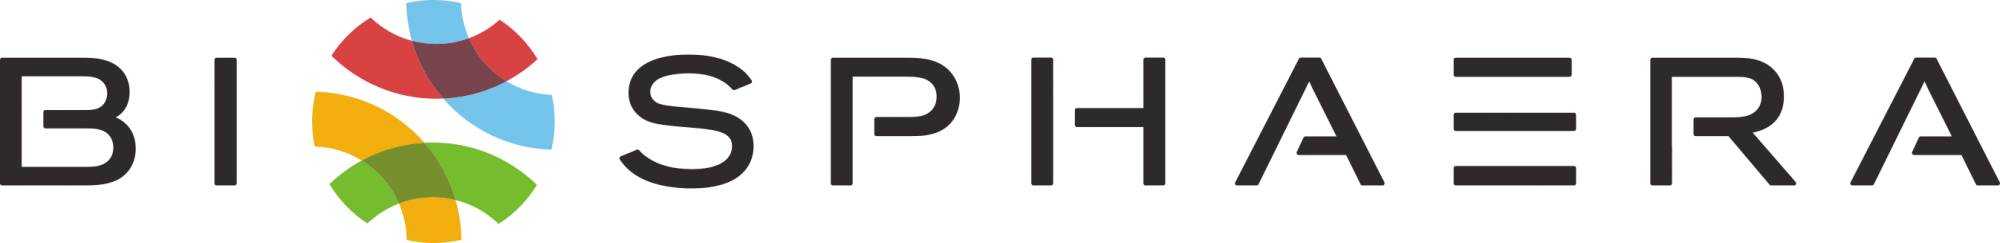 biosphaera-logo2021.png